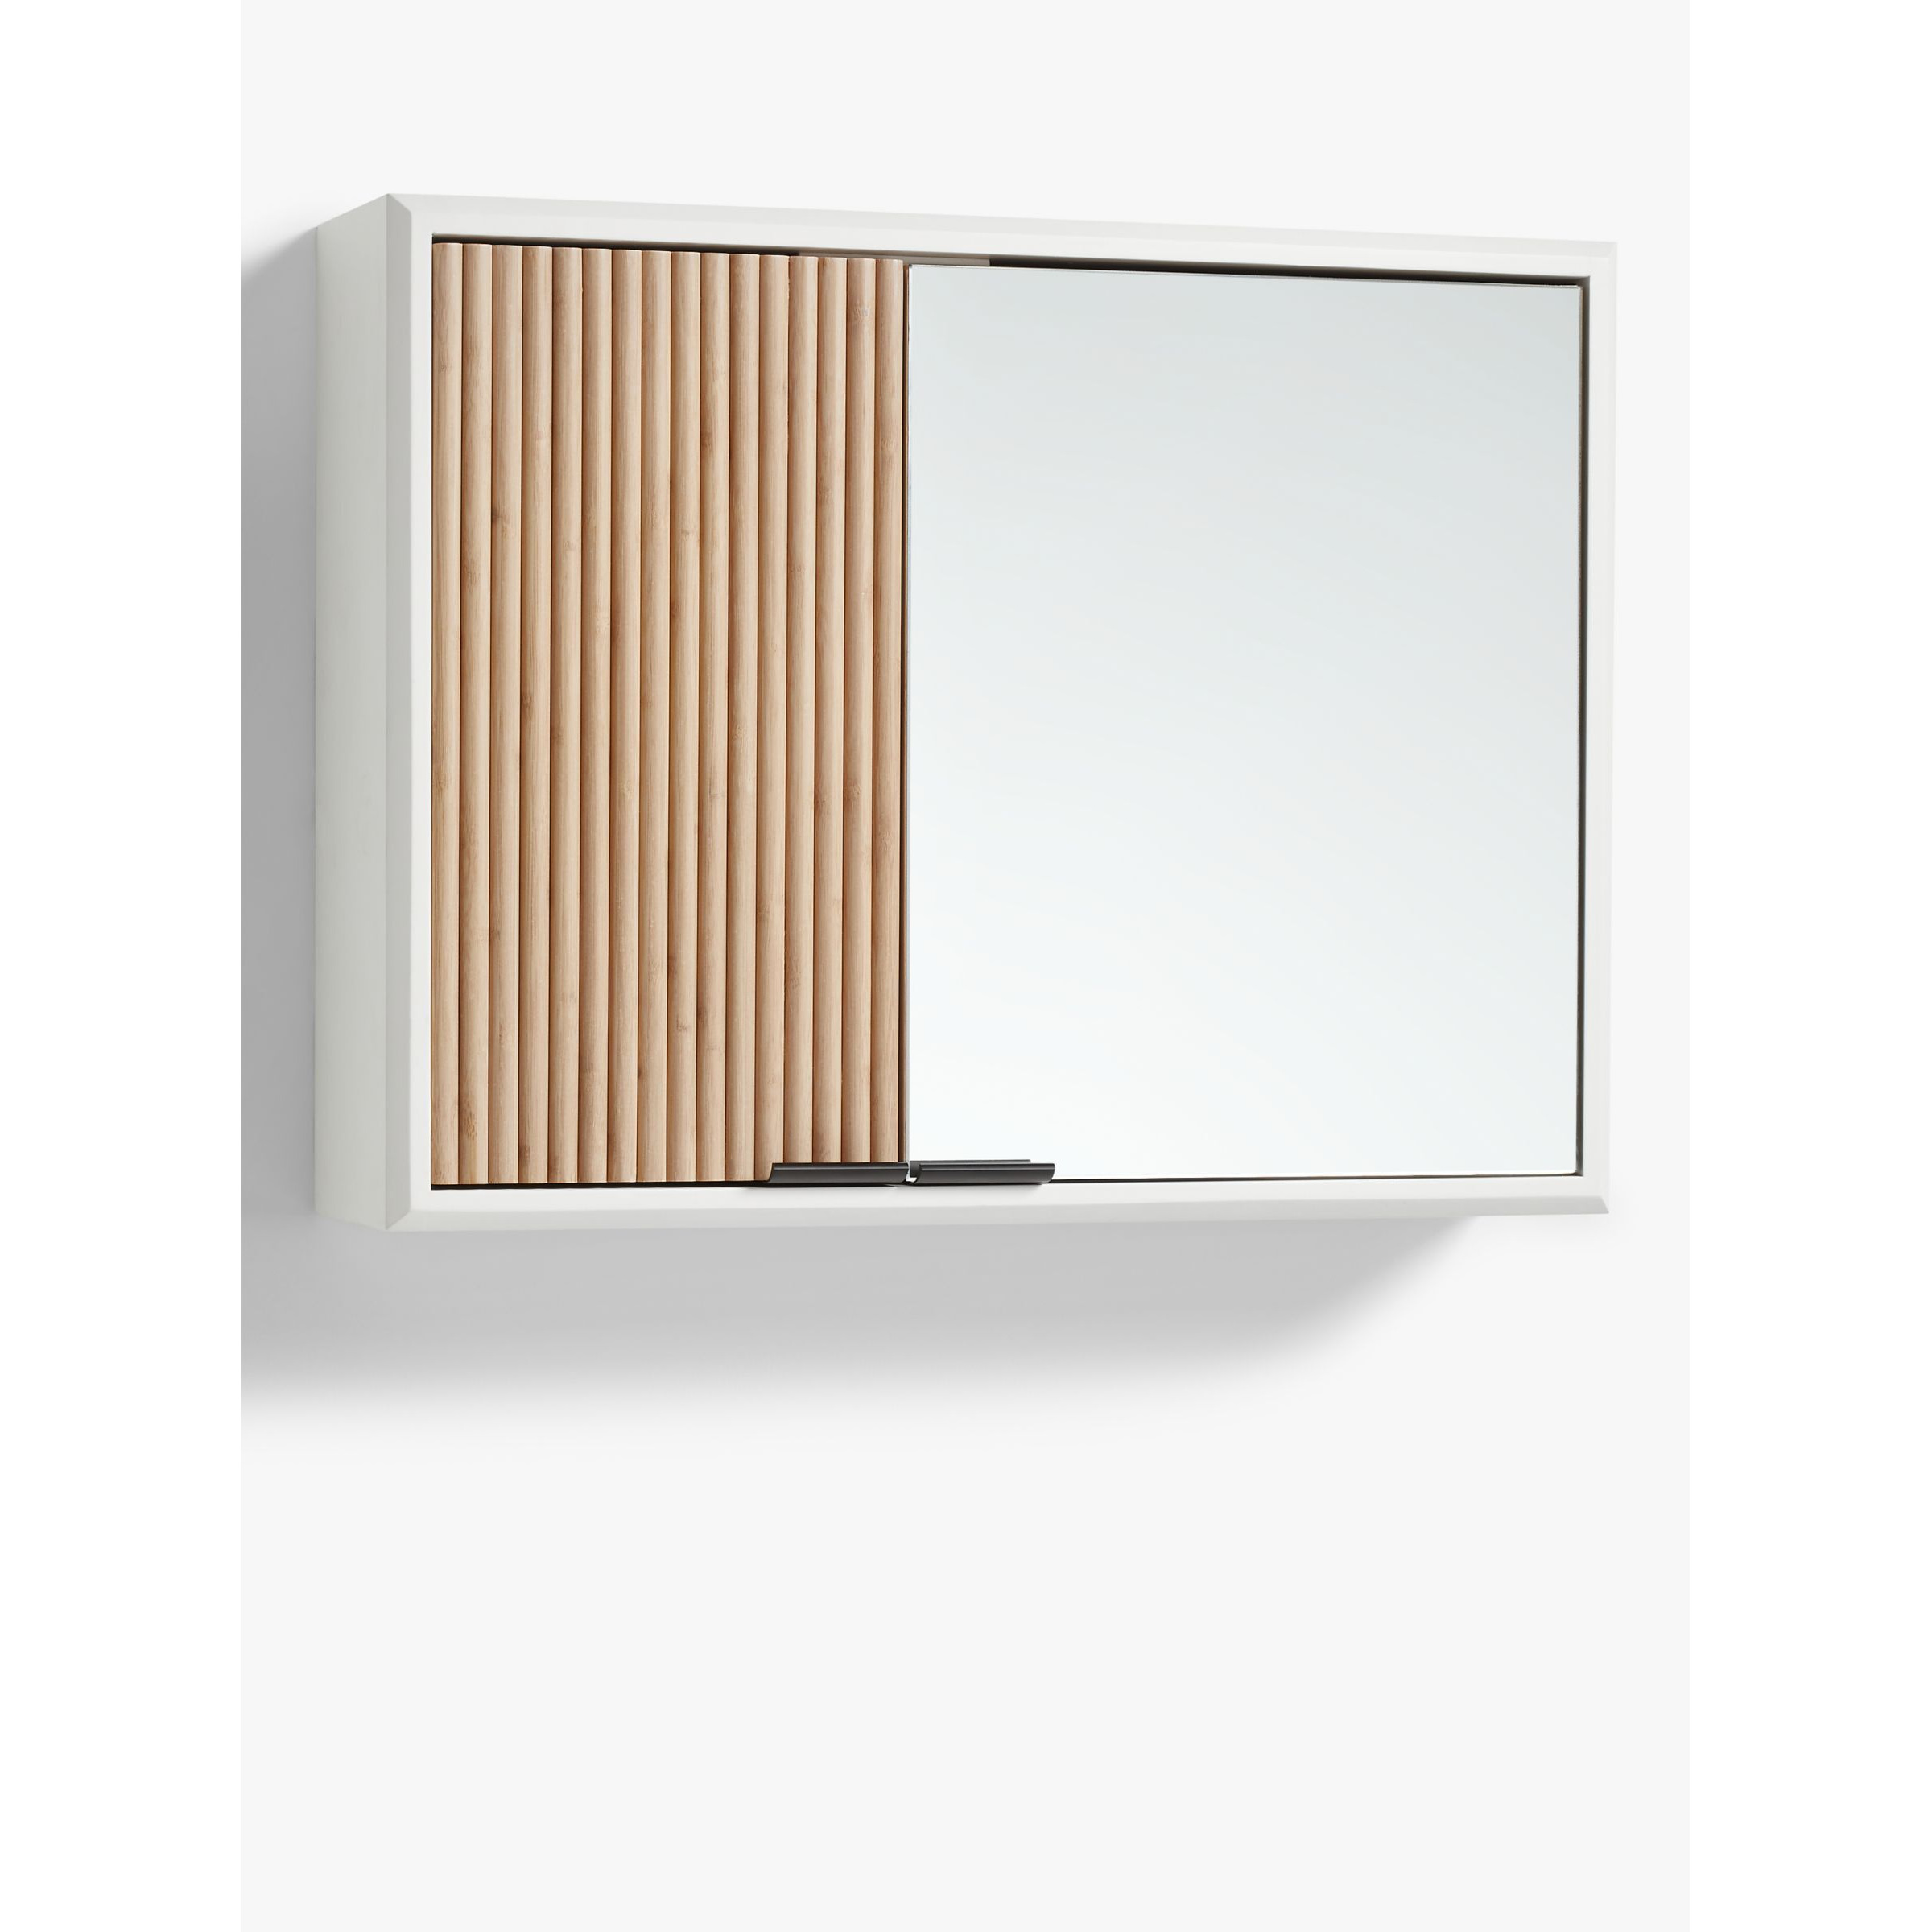 John Lewis ANYDAY Ridge Double Mirrored Bathroom Cabinet, White - image 1